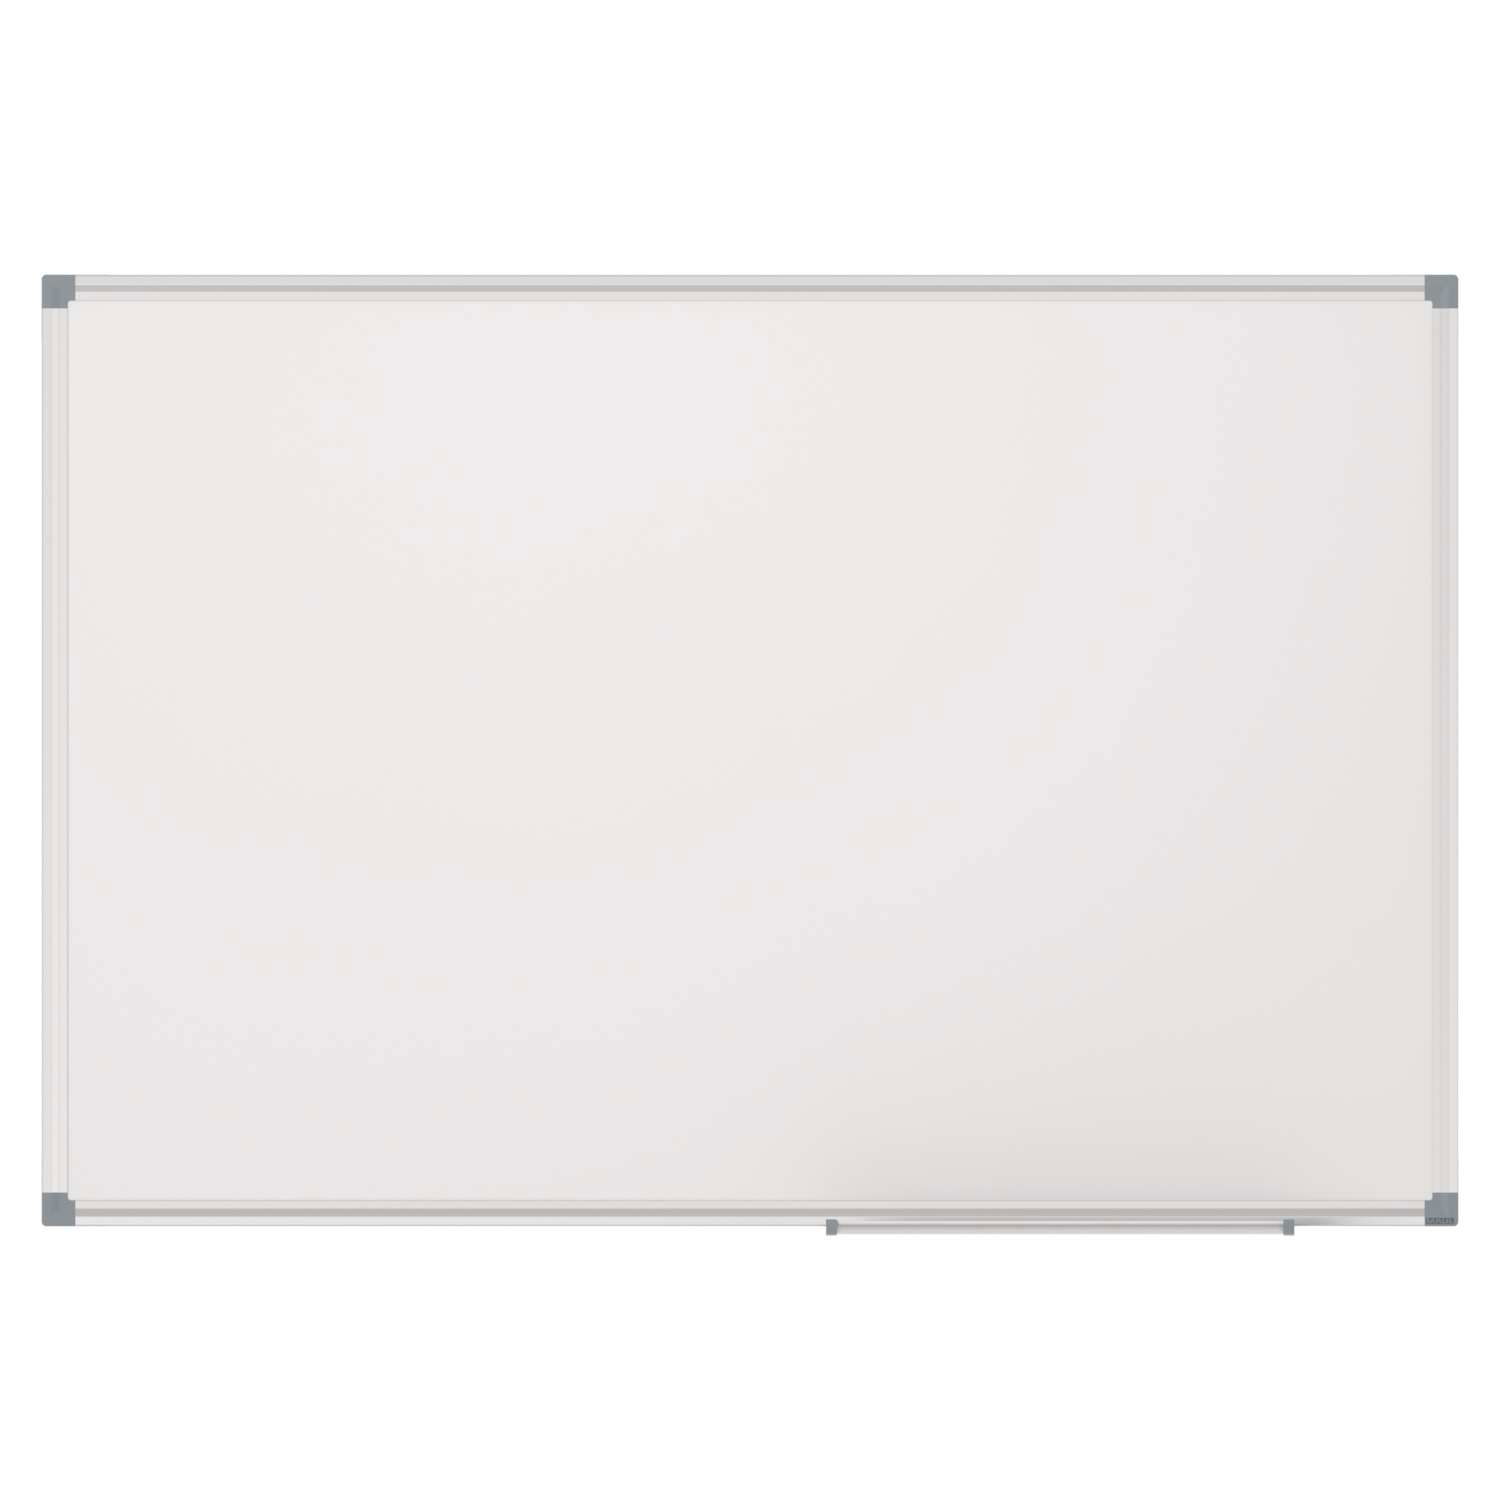 Whiteboard MAULstandard, 120x300 cm